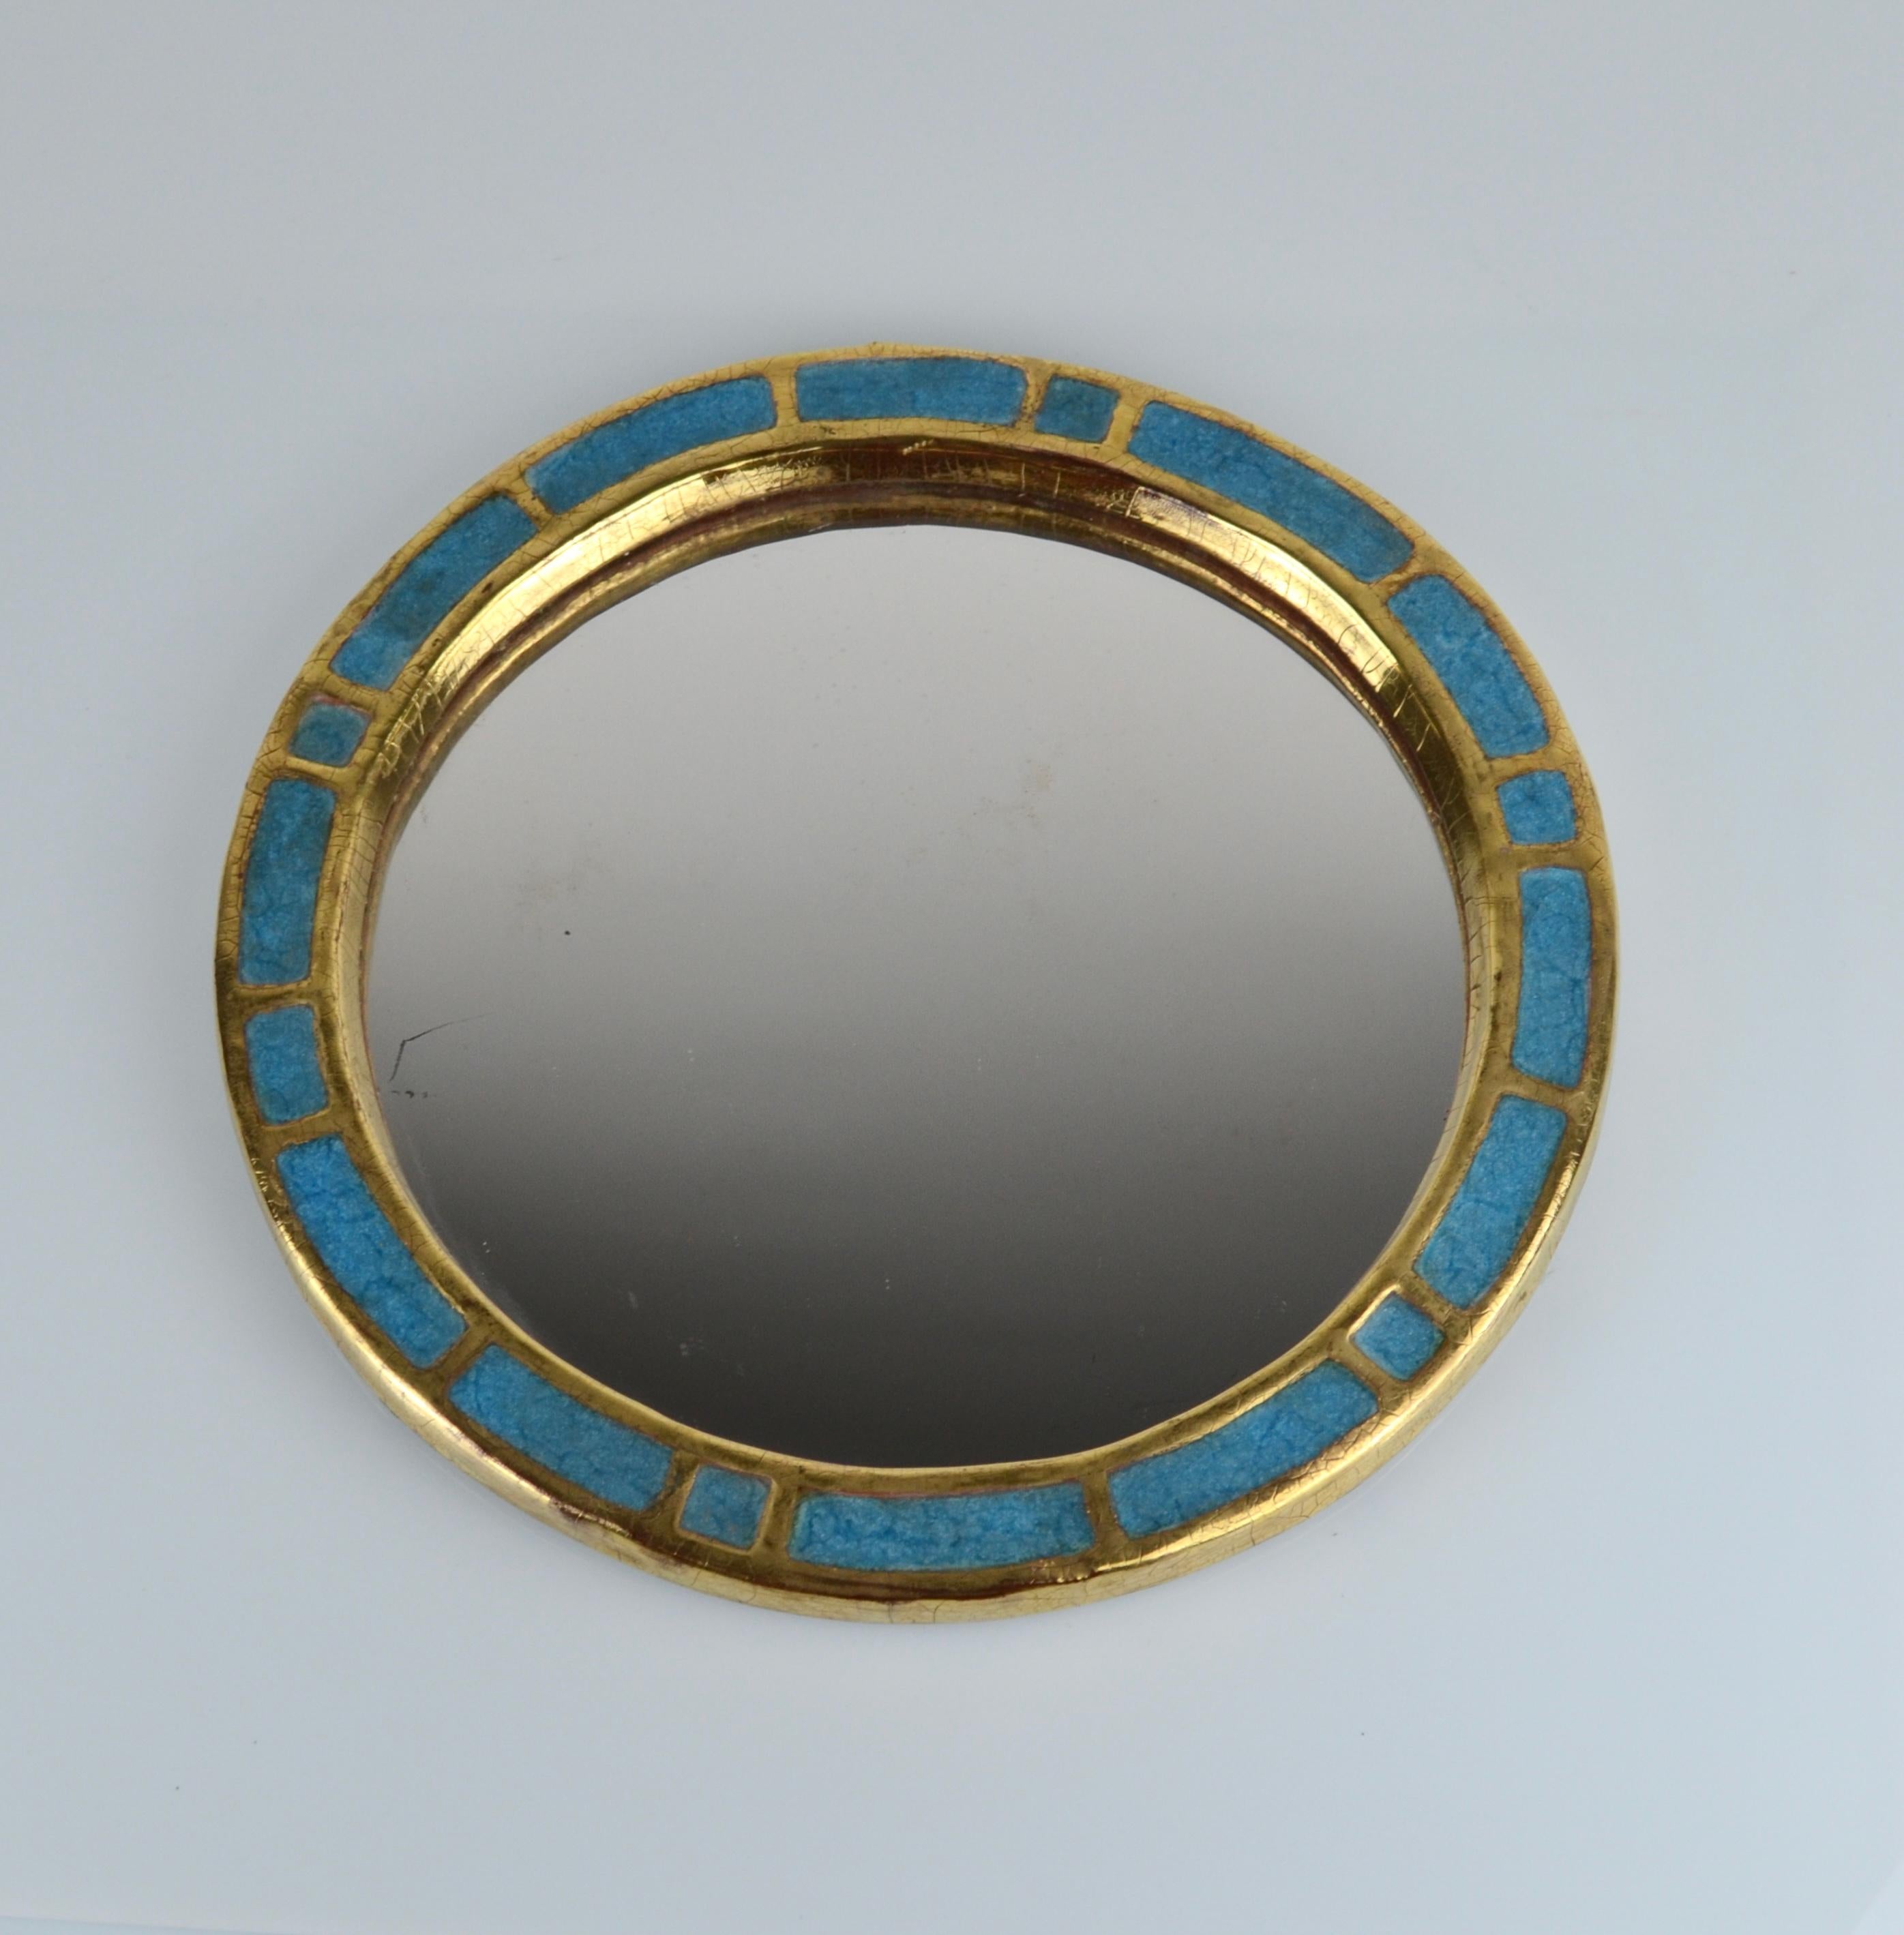 Mithé Espelt ceramic mirror, circa 1960, France.
Glazed embossed earthenware.
Crackled gold and blue ceramic.
Original felt backing.

